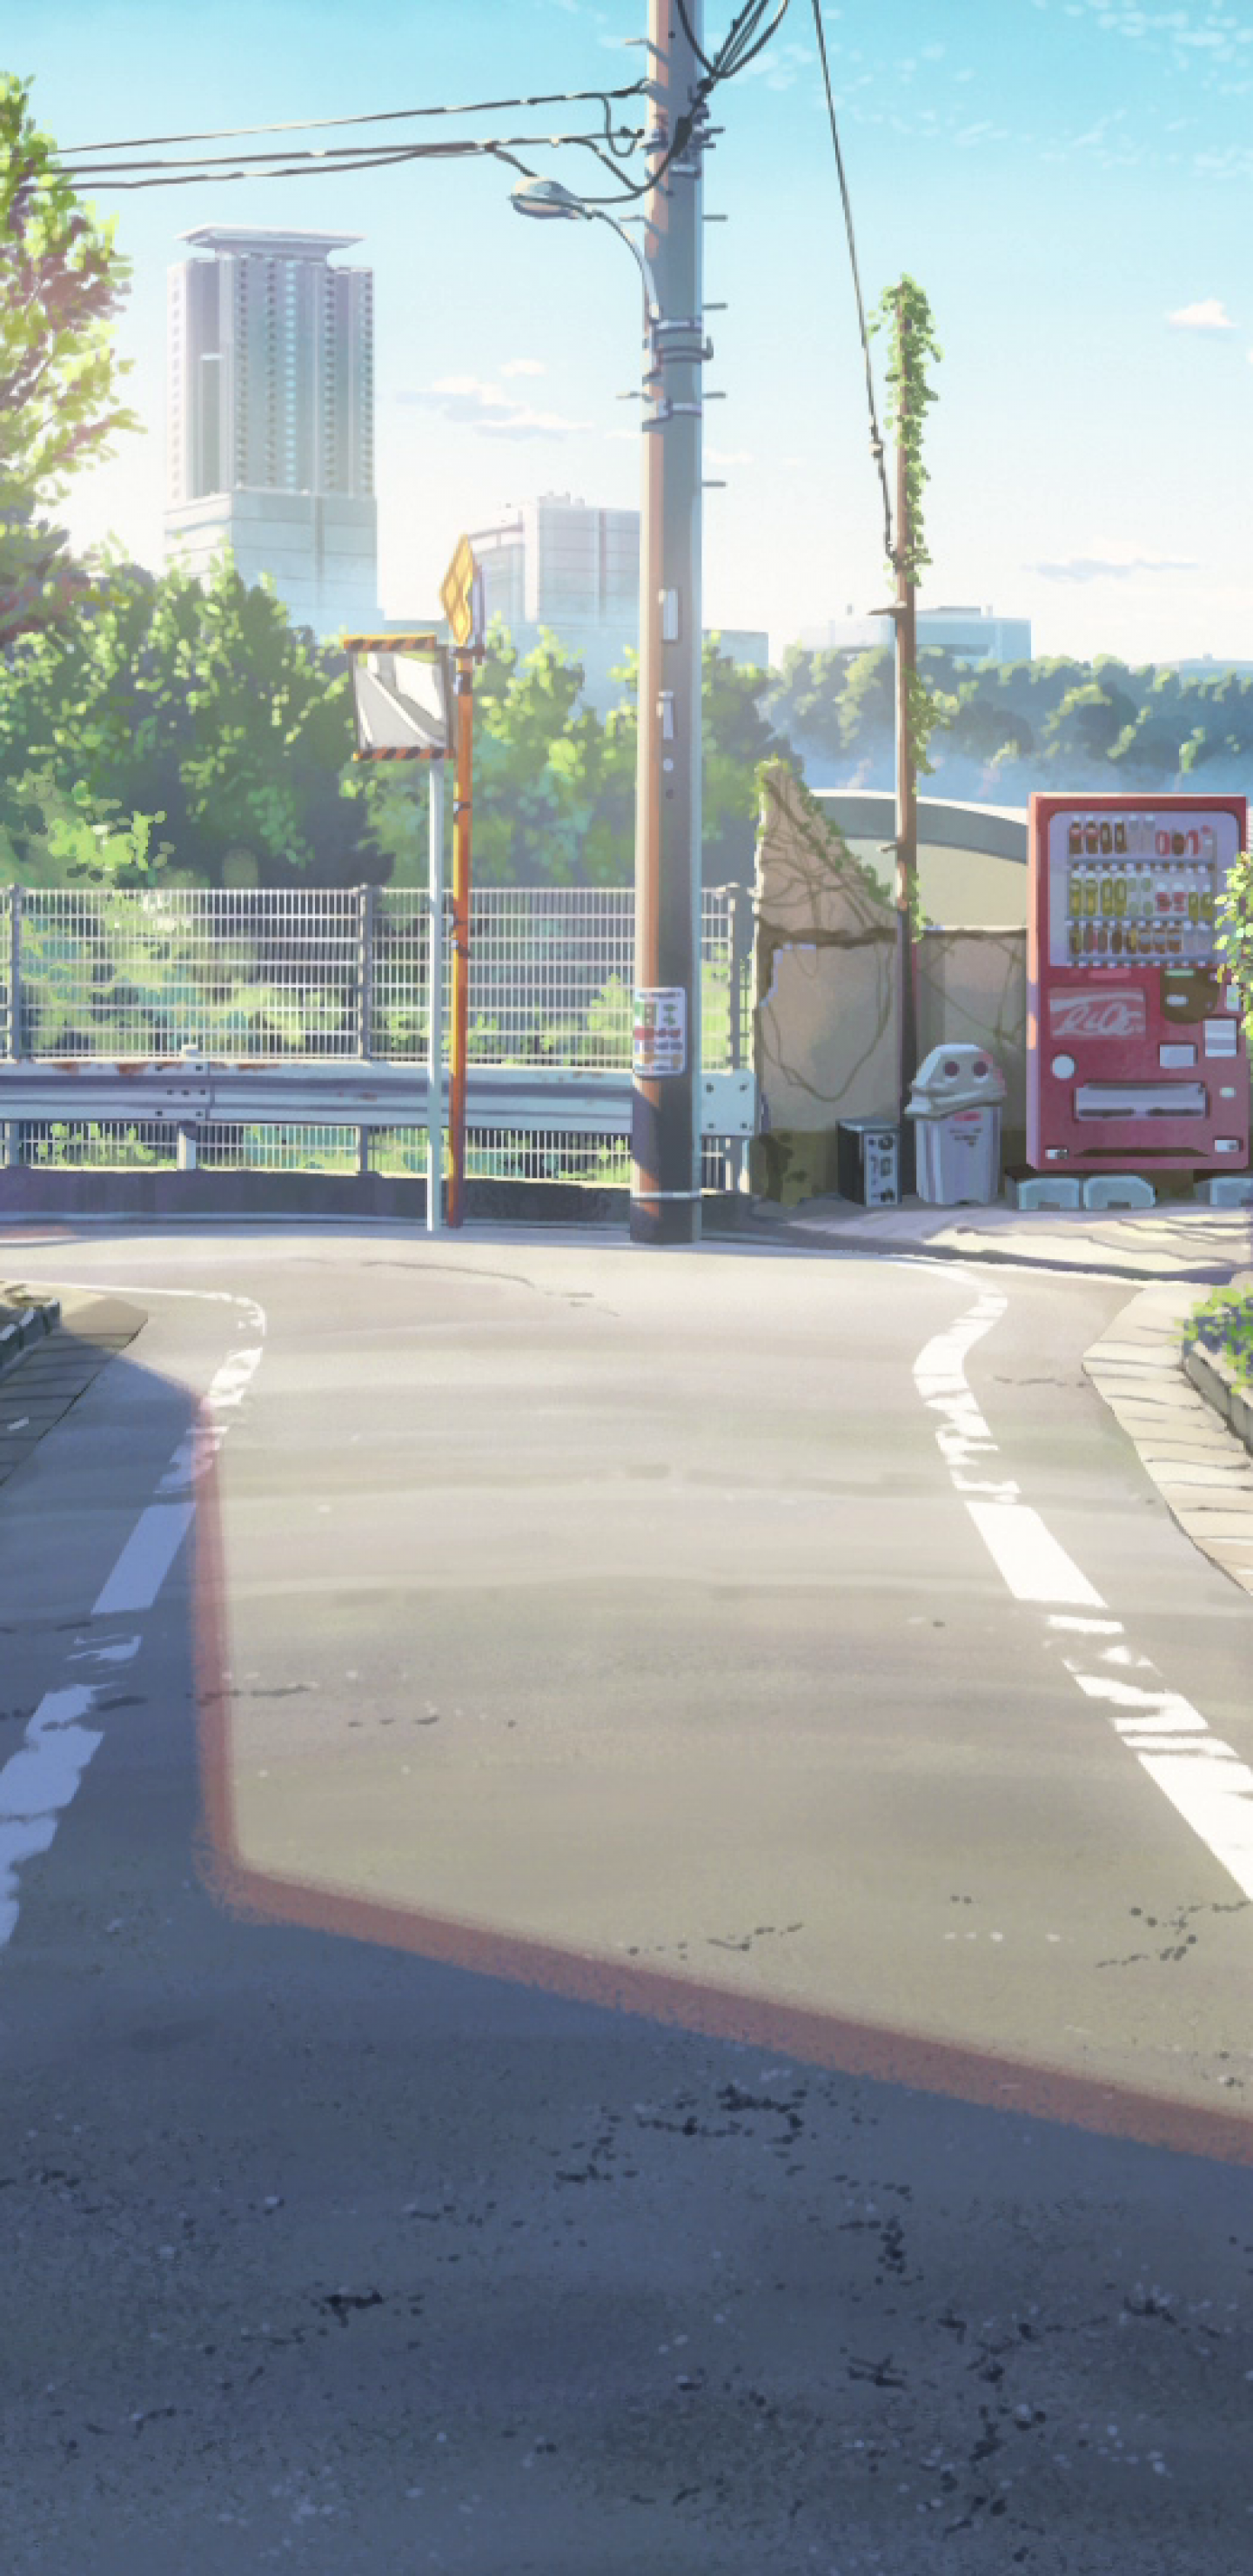 City Anime Background Wallpaper 103761 - Baltana